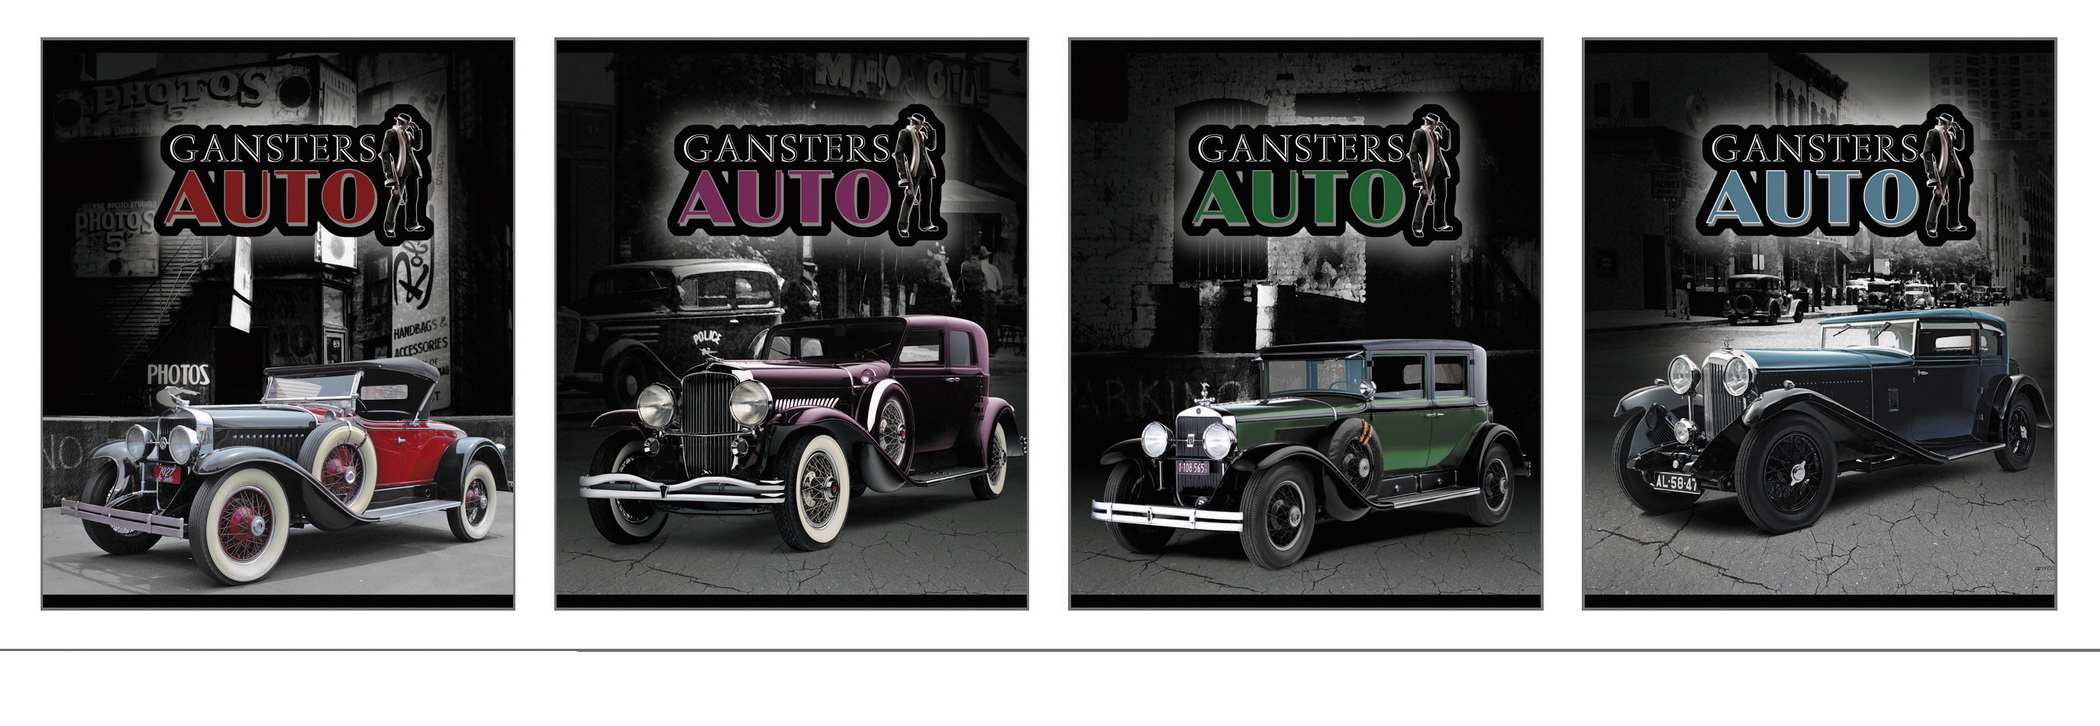 Gansters Cars